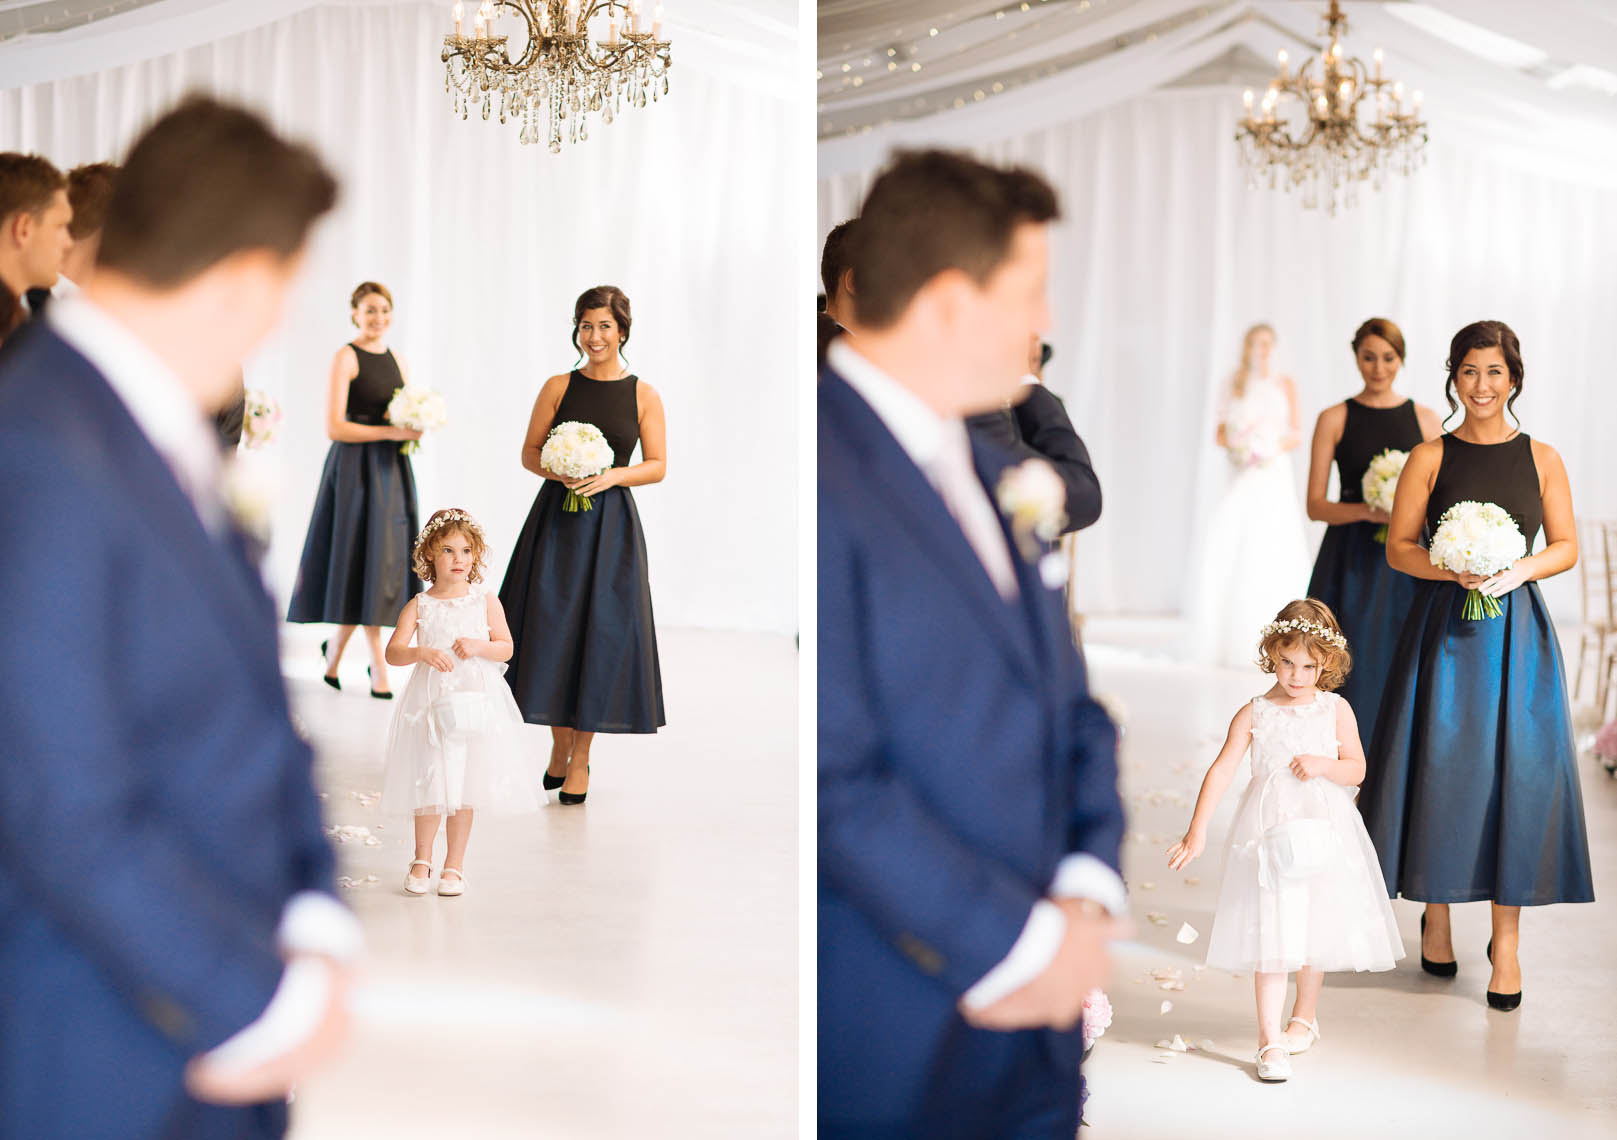 down-aisle-bridesmaid-wedding-ceremony-axnoller-dorset-photographer-12